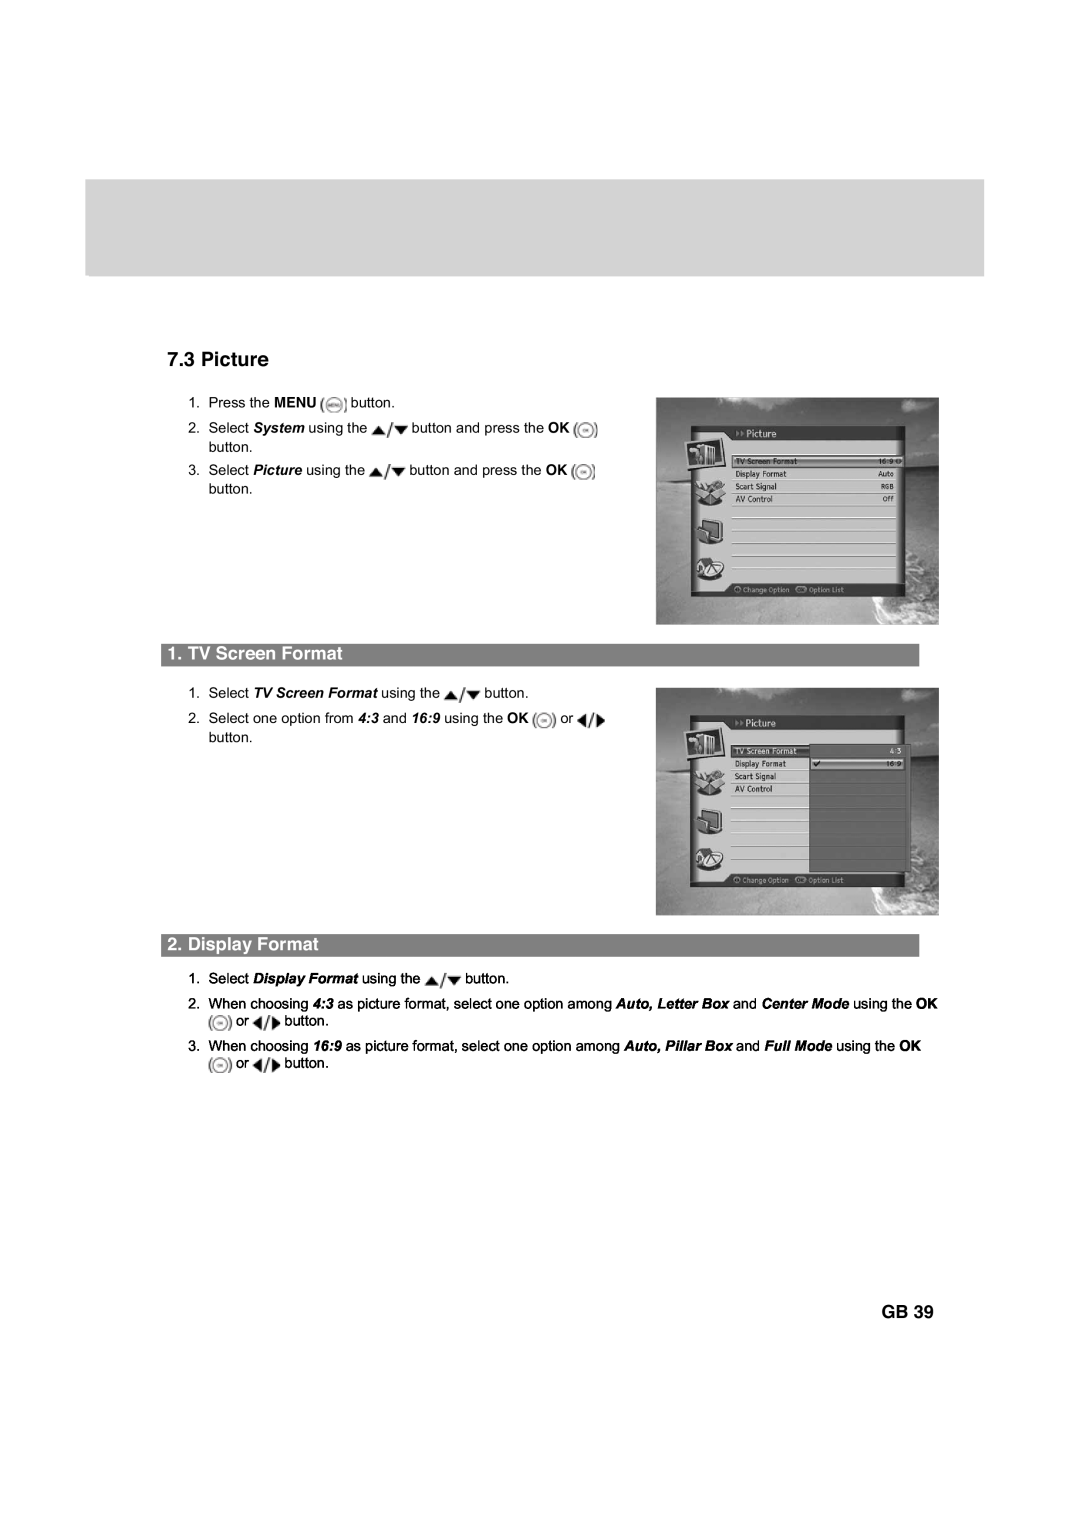 Humax HDCI-2000 manual Picture, TV Screen Format, Display Format 